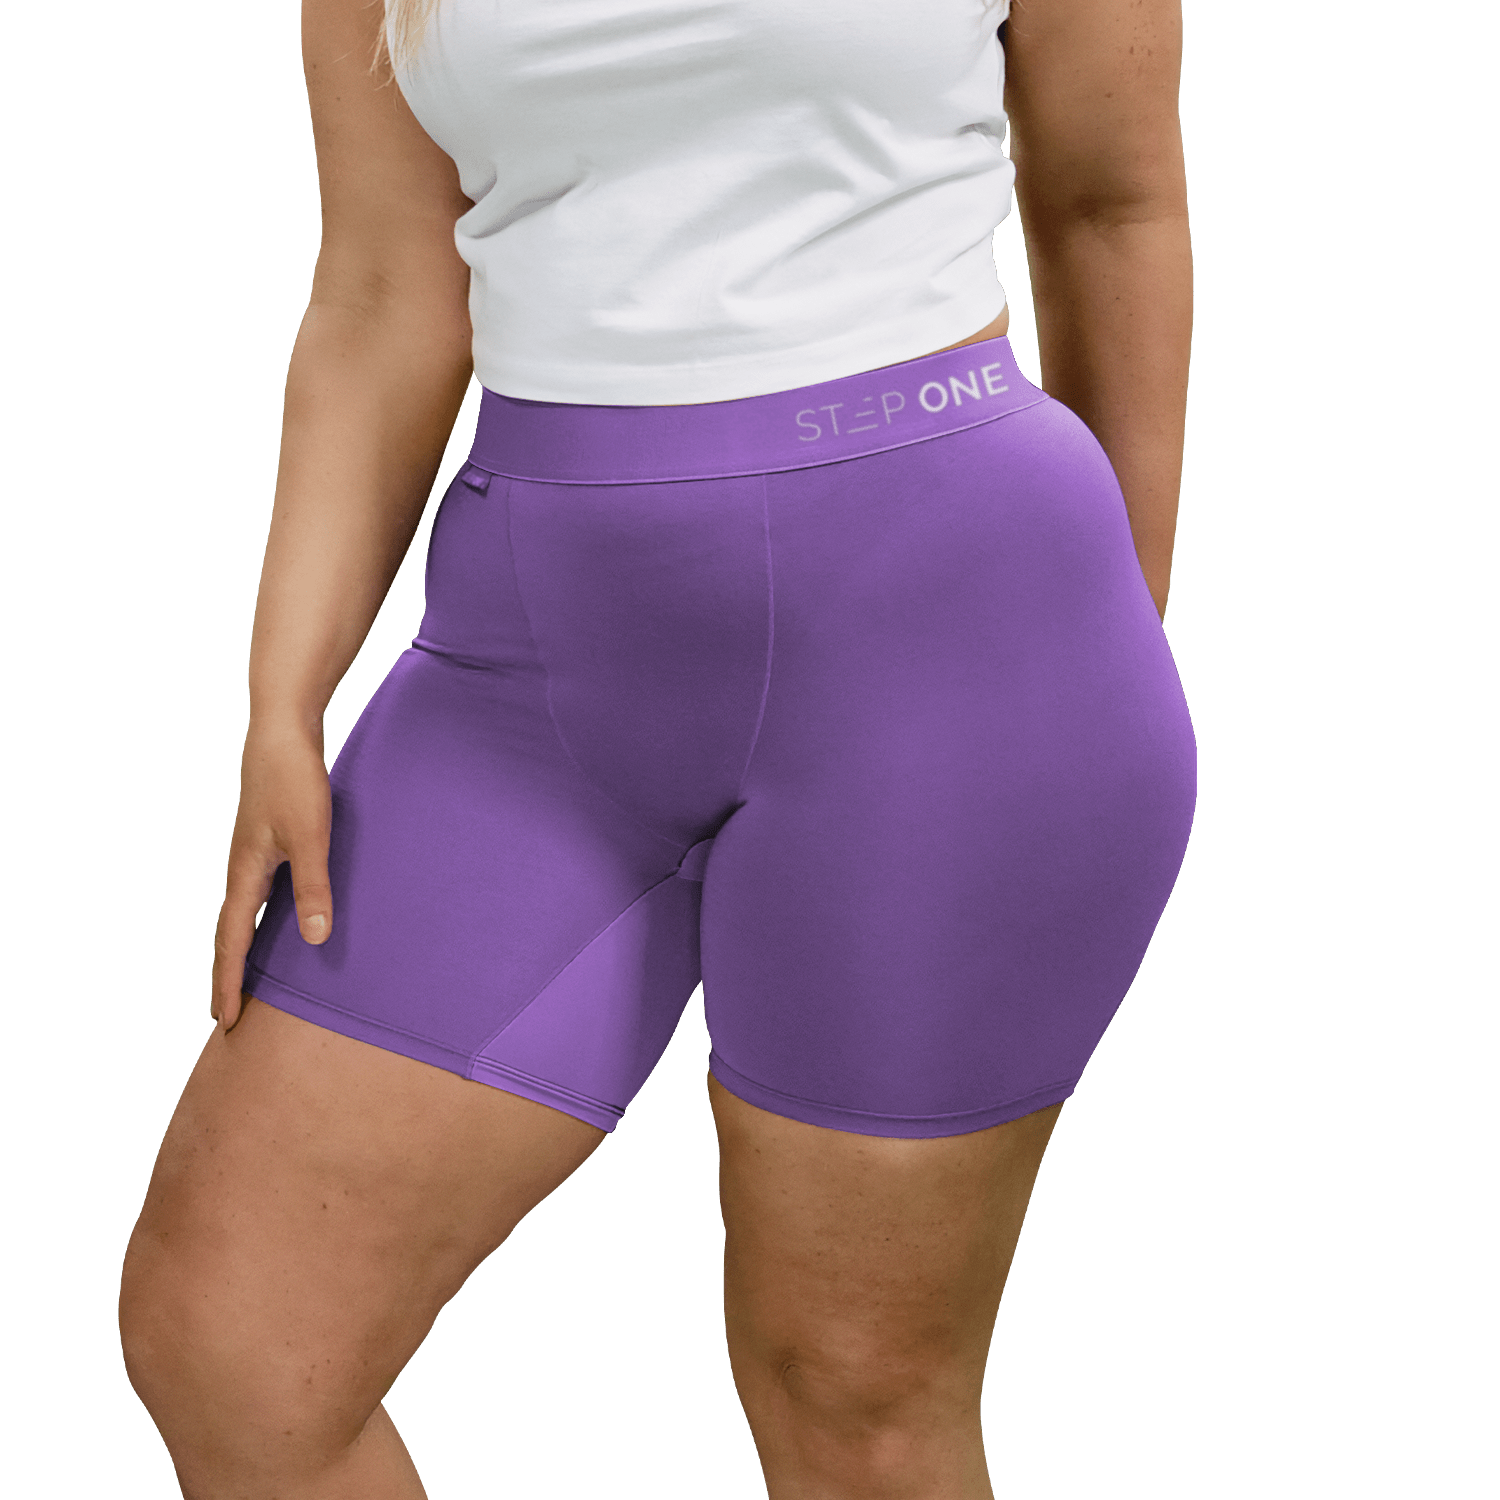 Women's Body Shorts - Pandamoniums, Step One